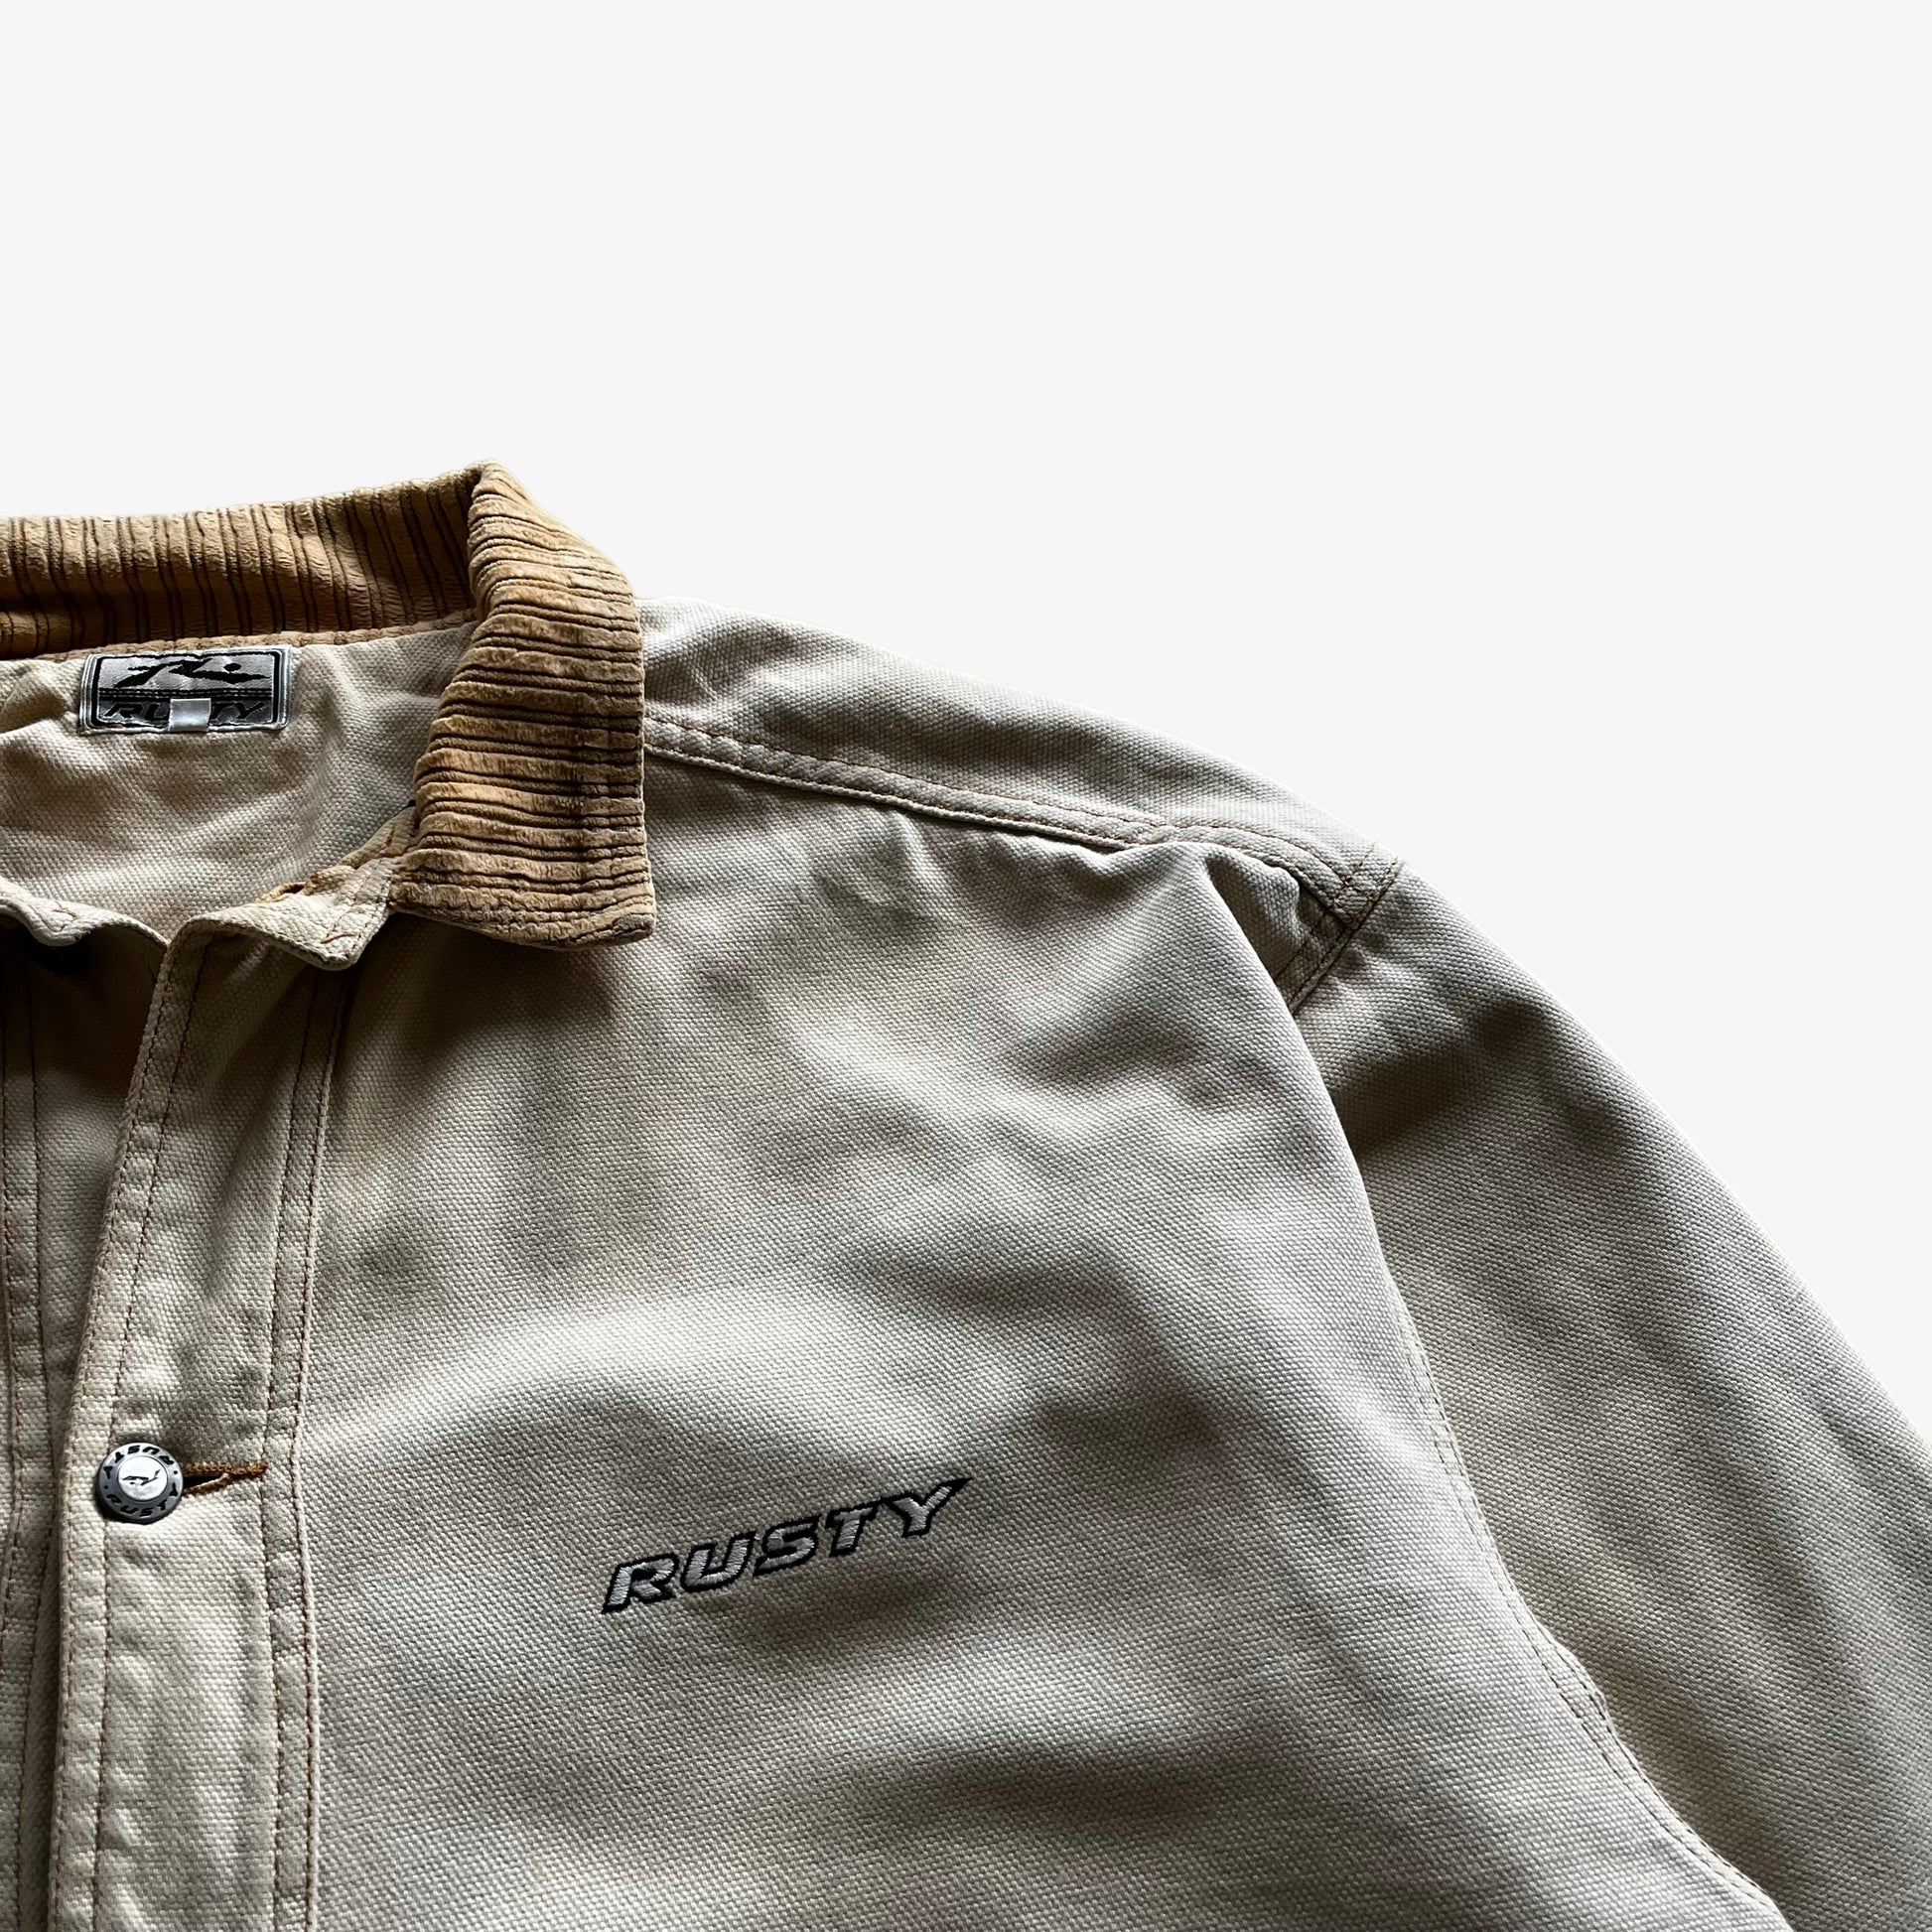 Vintage 90s Mens Rusty Workwear Jacket With Corduroy Collar Logo - Casspios Dream